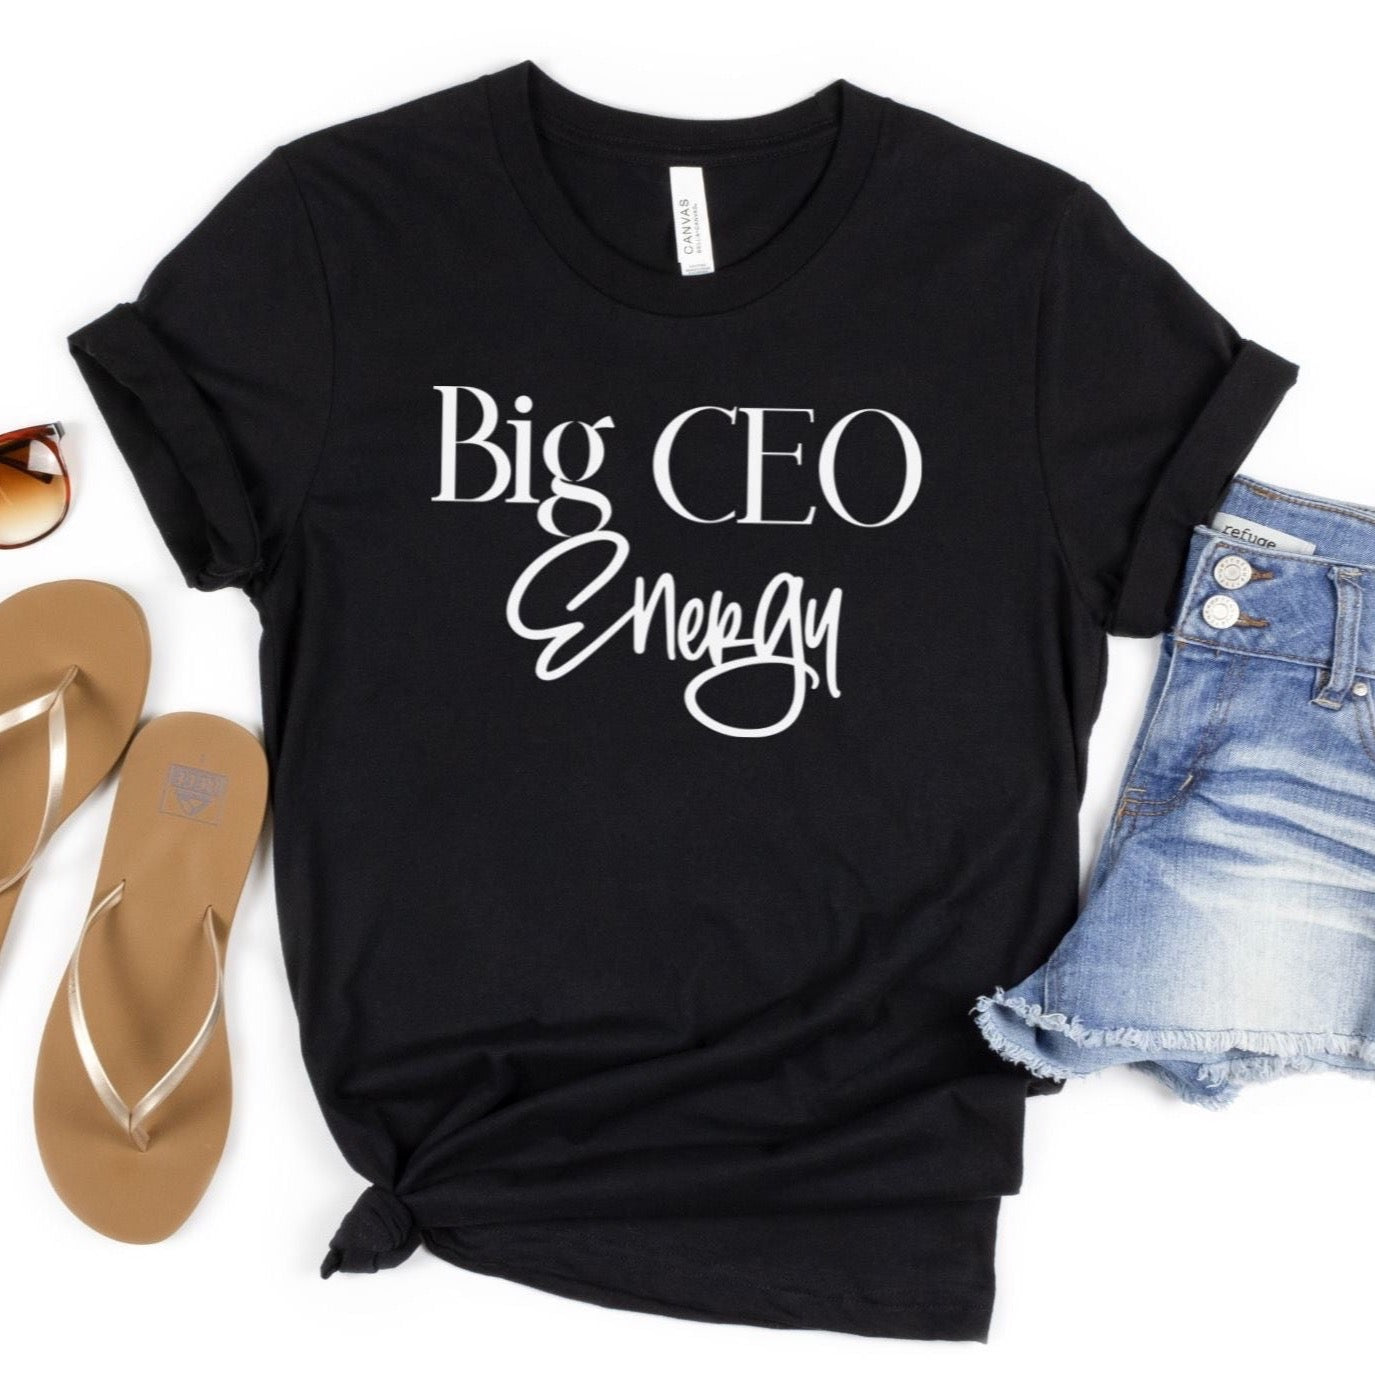 Big CEO Energy Shirt Black ; Small Business Owner Gift; Entrepreneur Gift